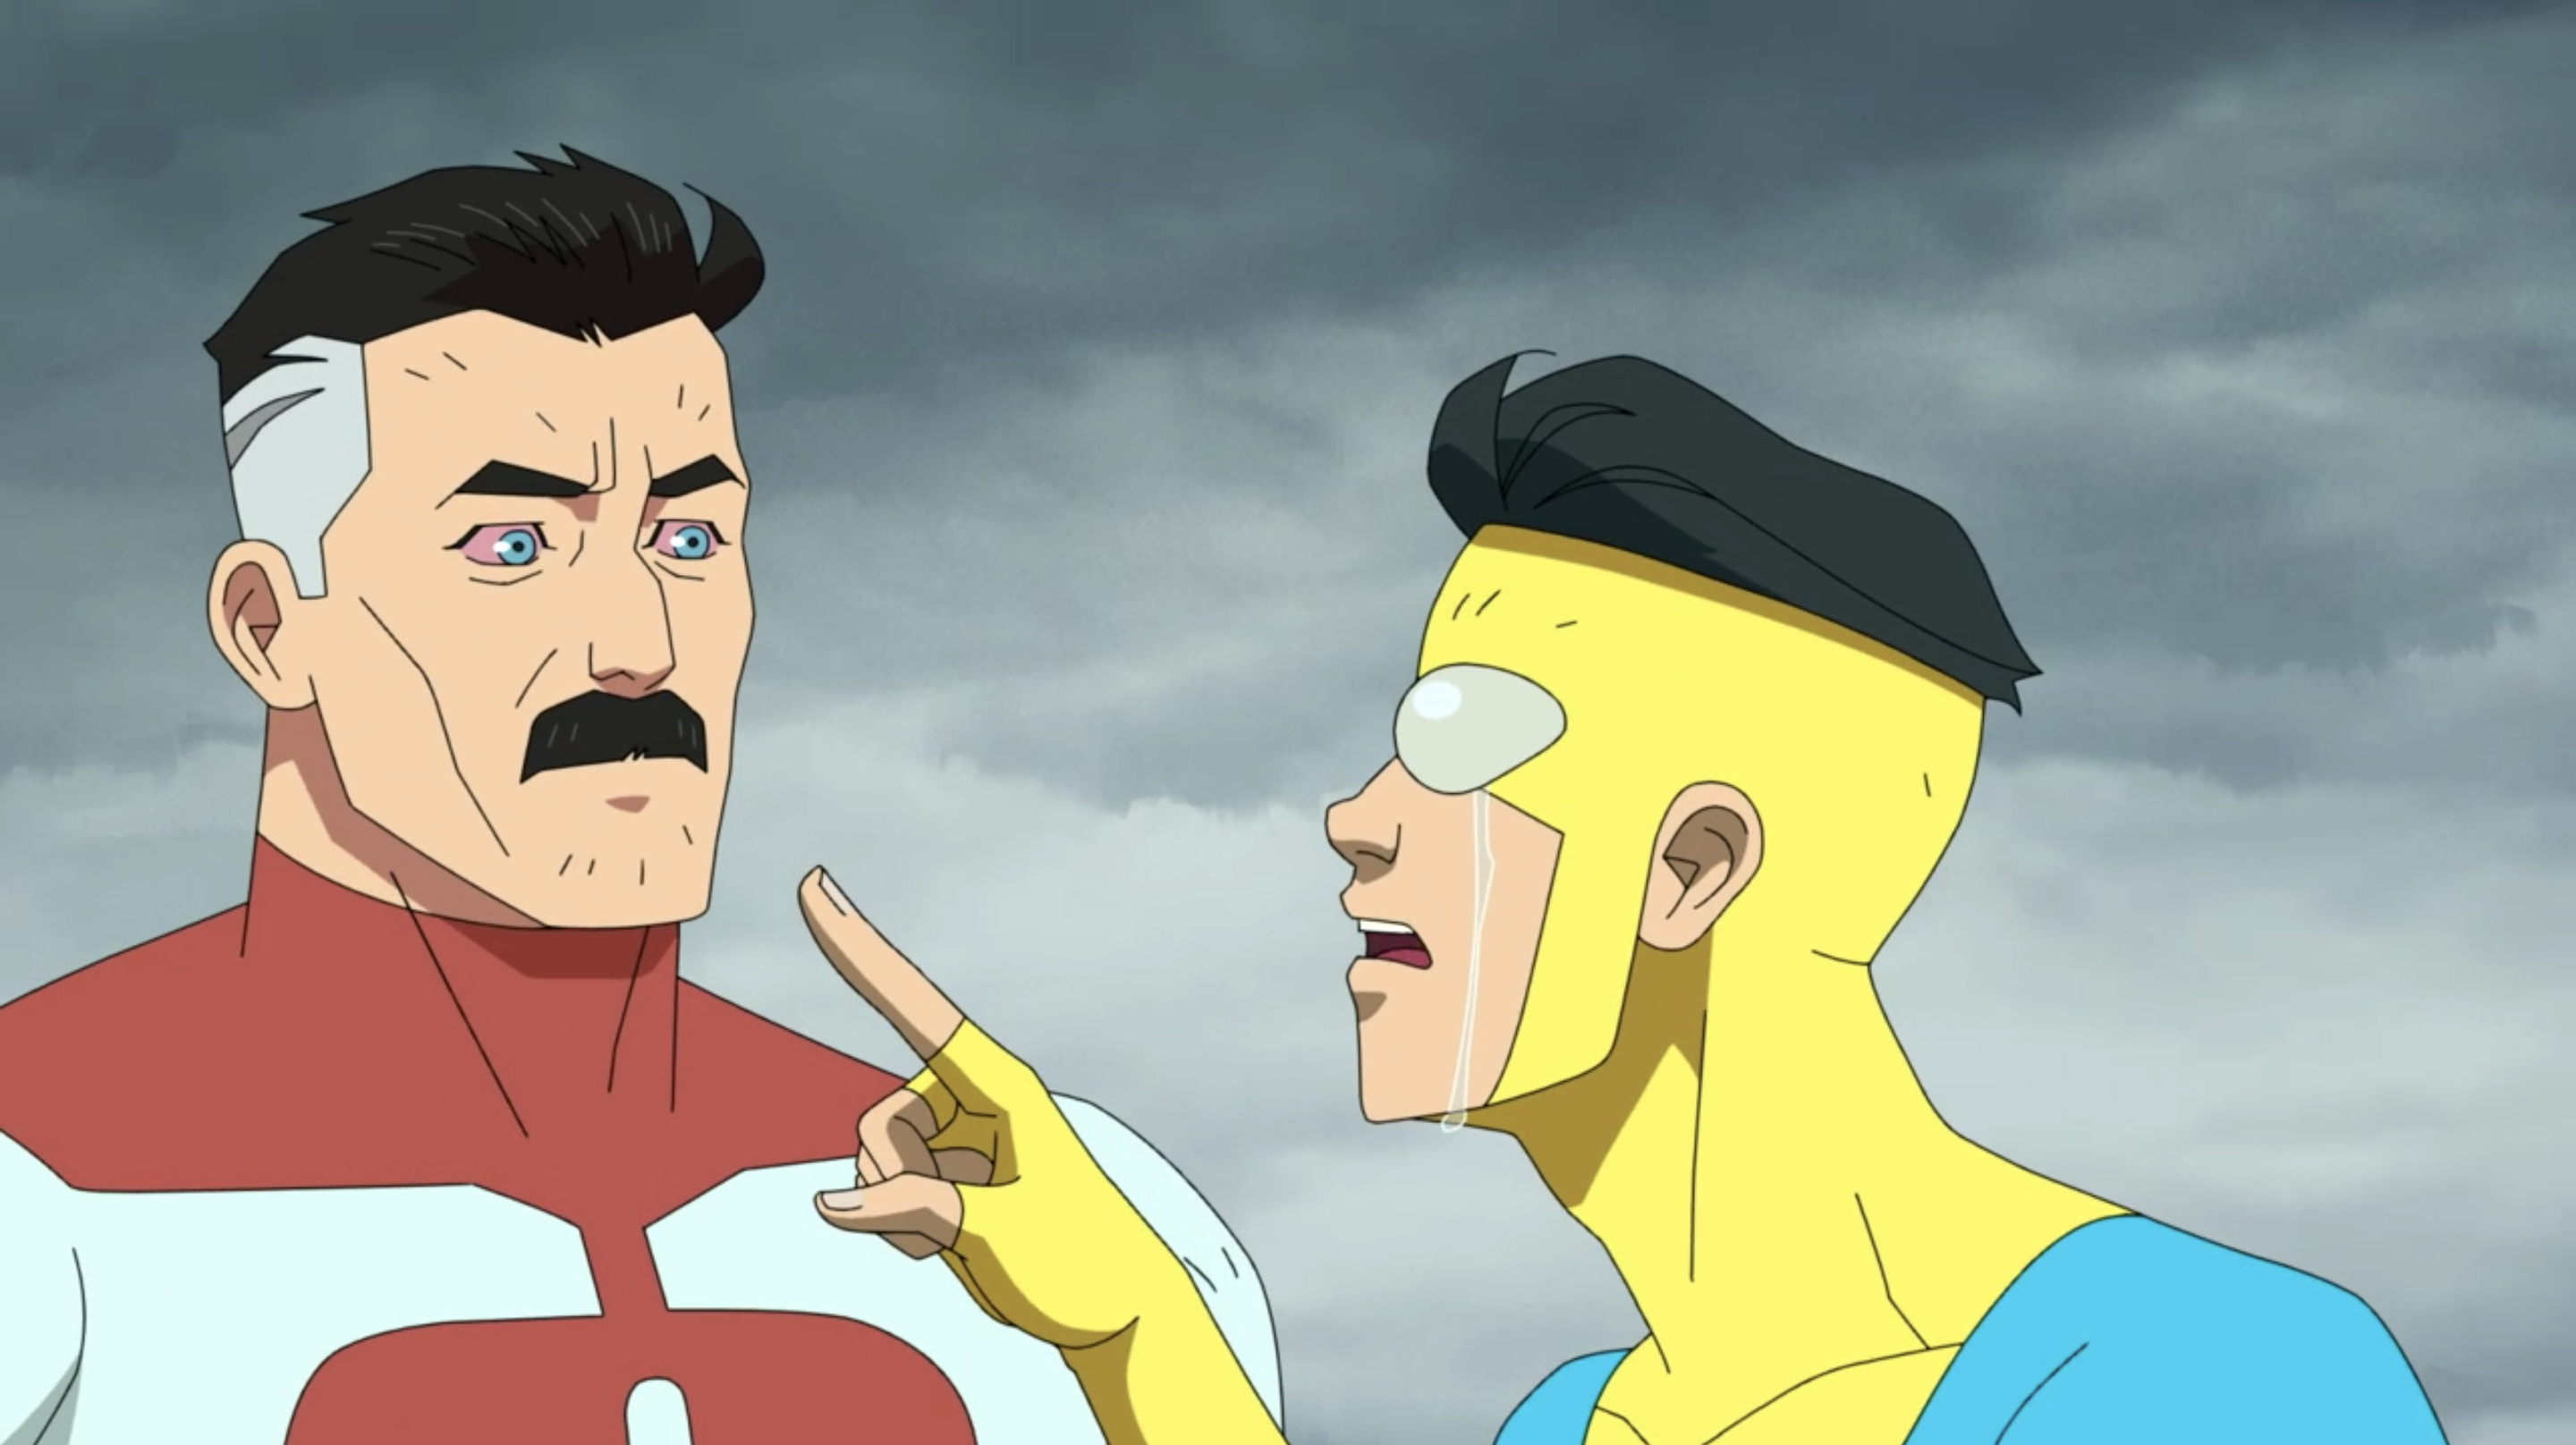 Invincible': Robert Kirkman on Season 2, Superhero Fatigue, More